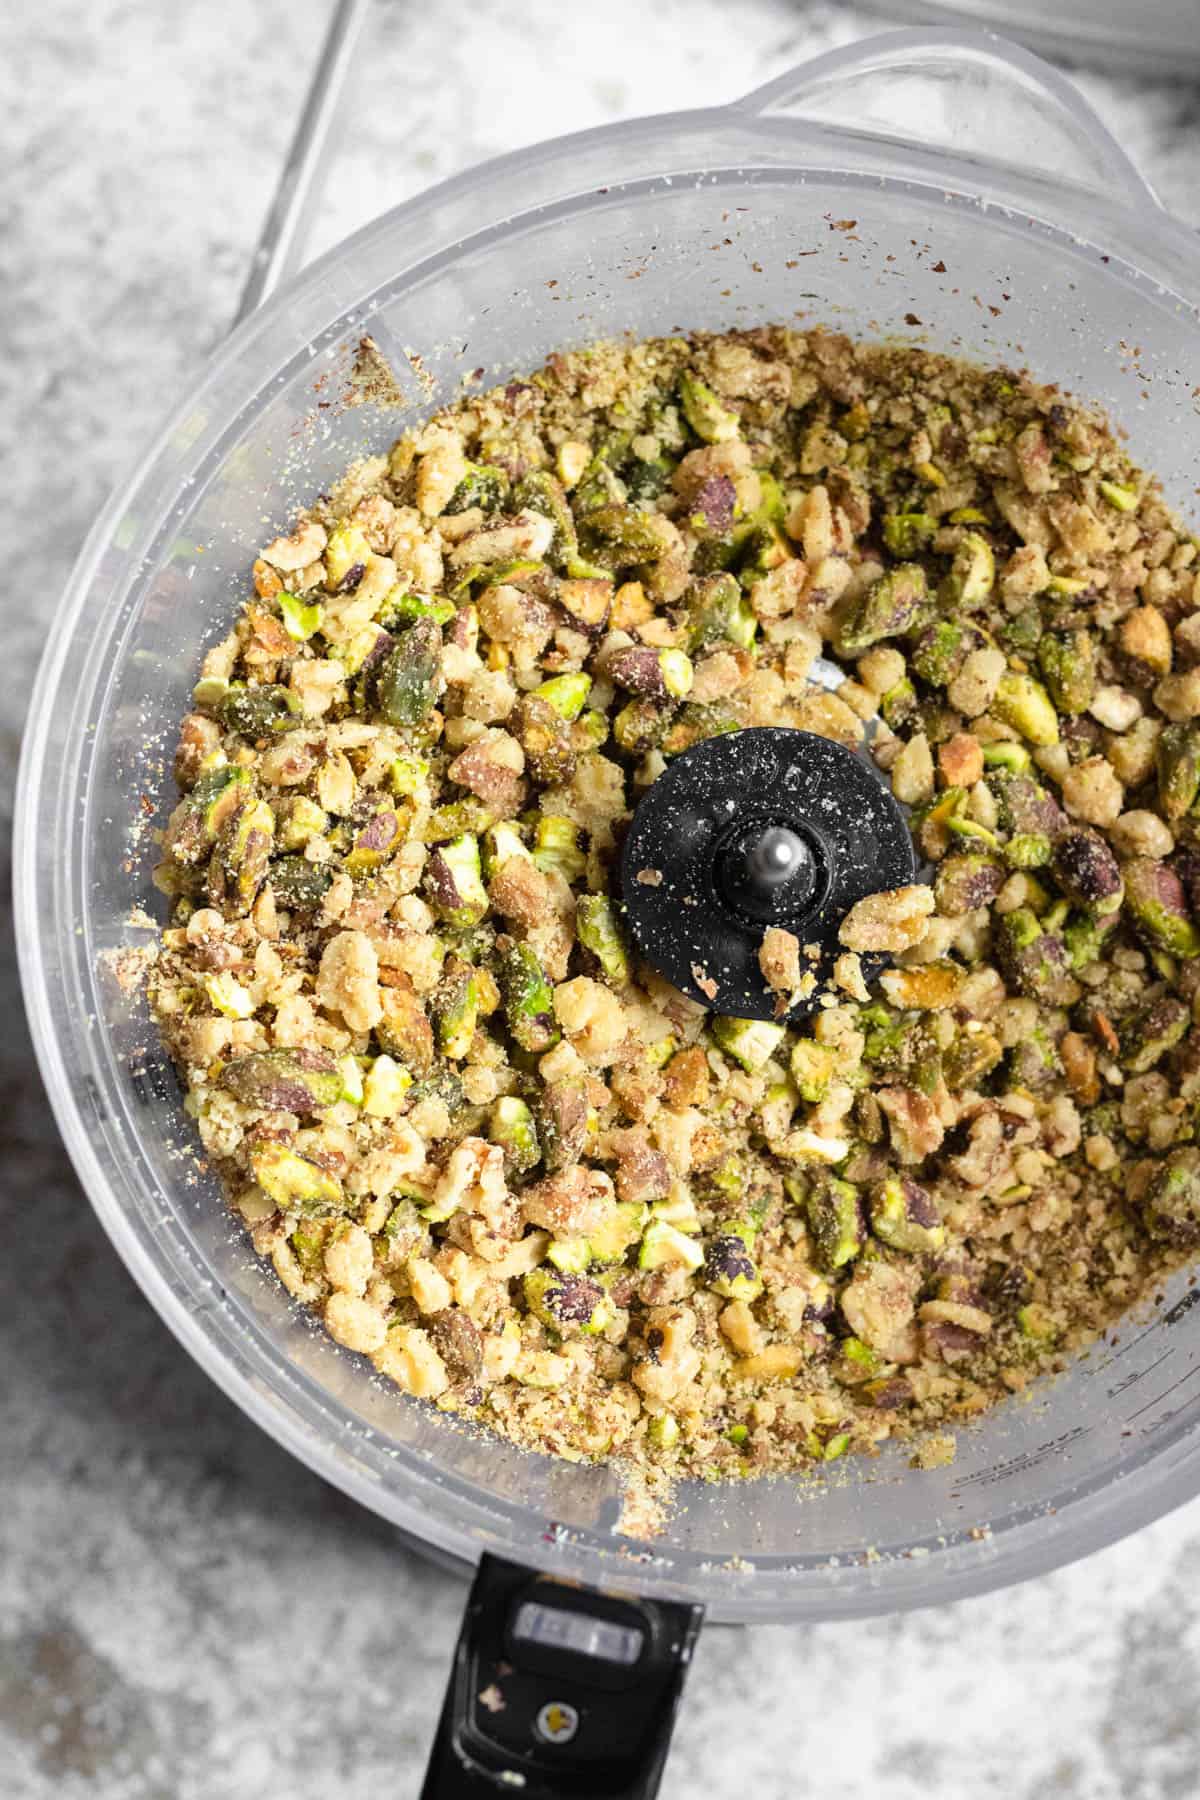 Ground up pistachio nuts inside a food processor to prepare Pistachio Baklava.